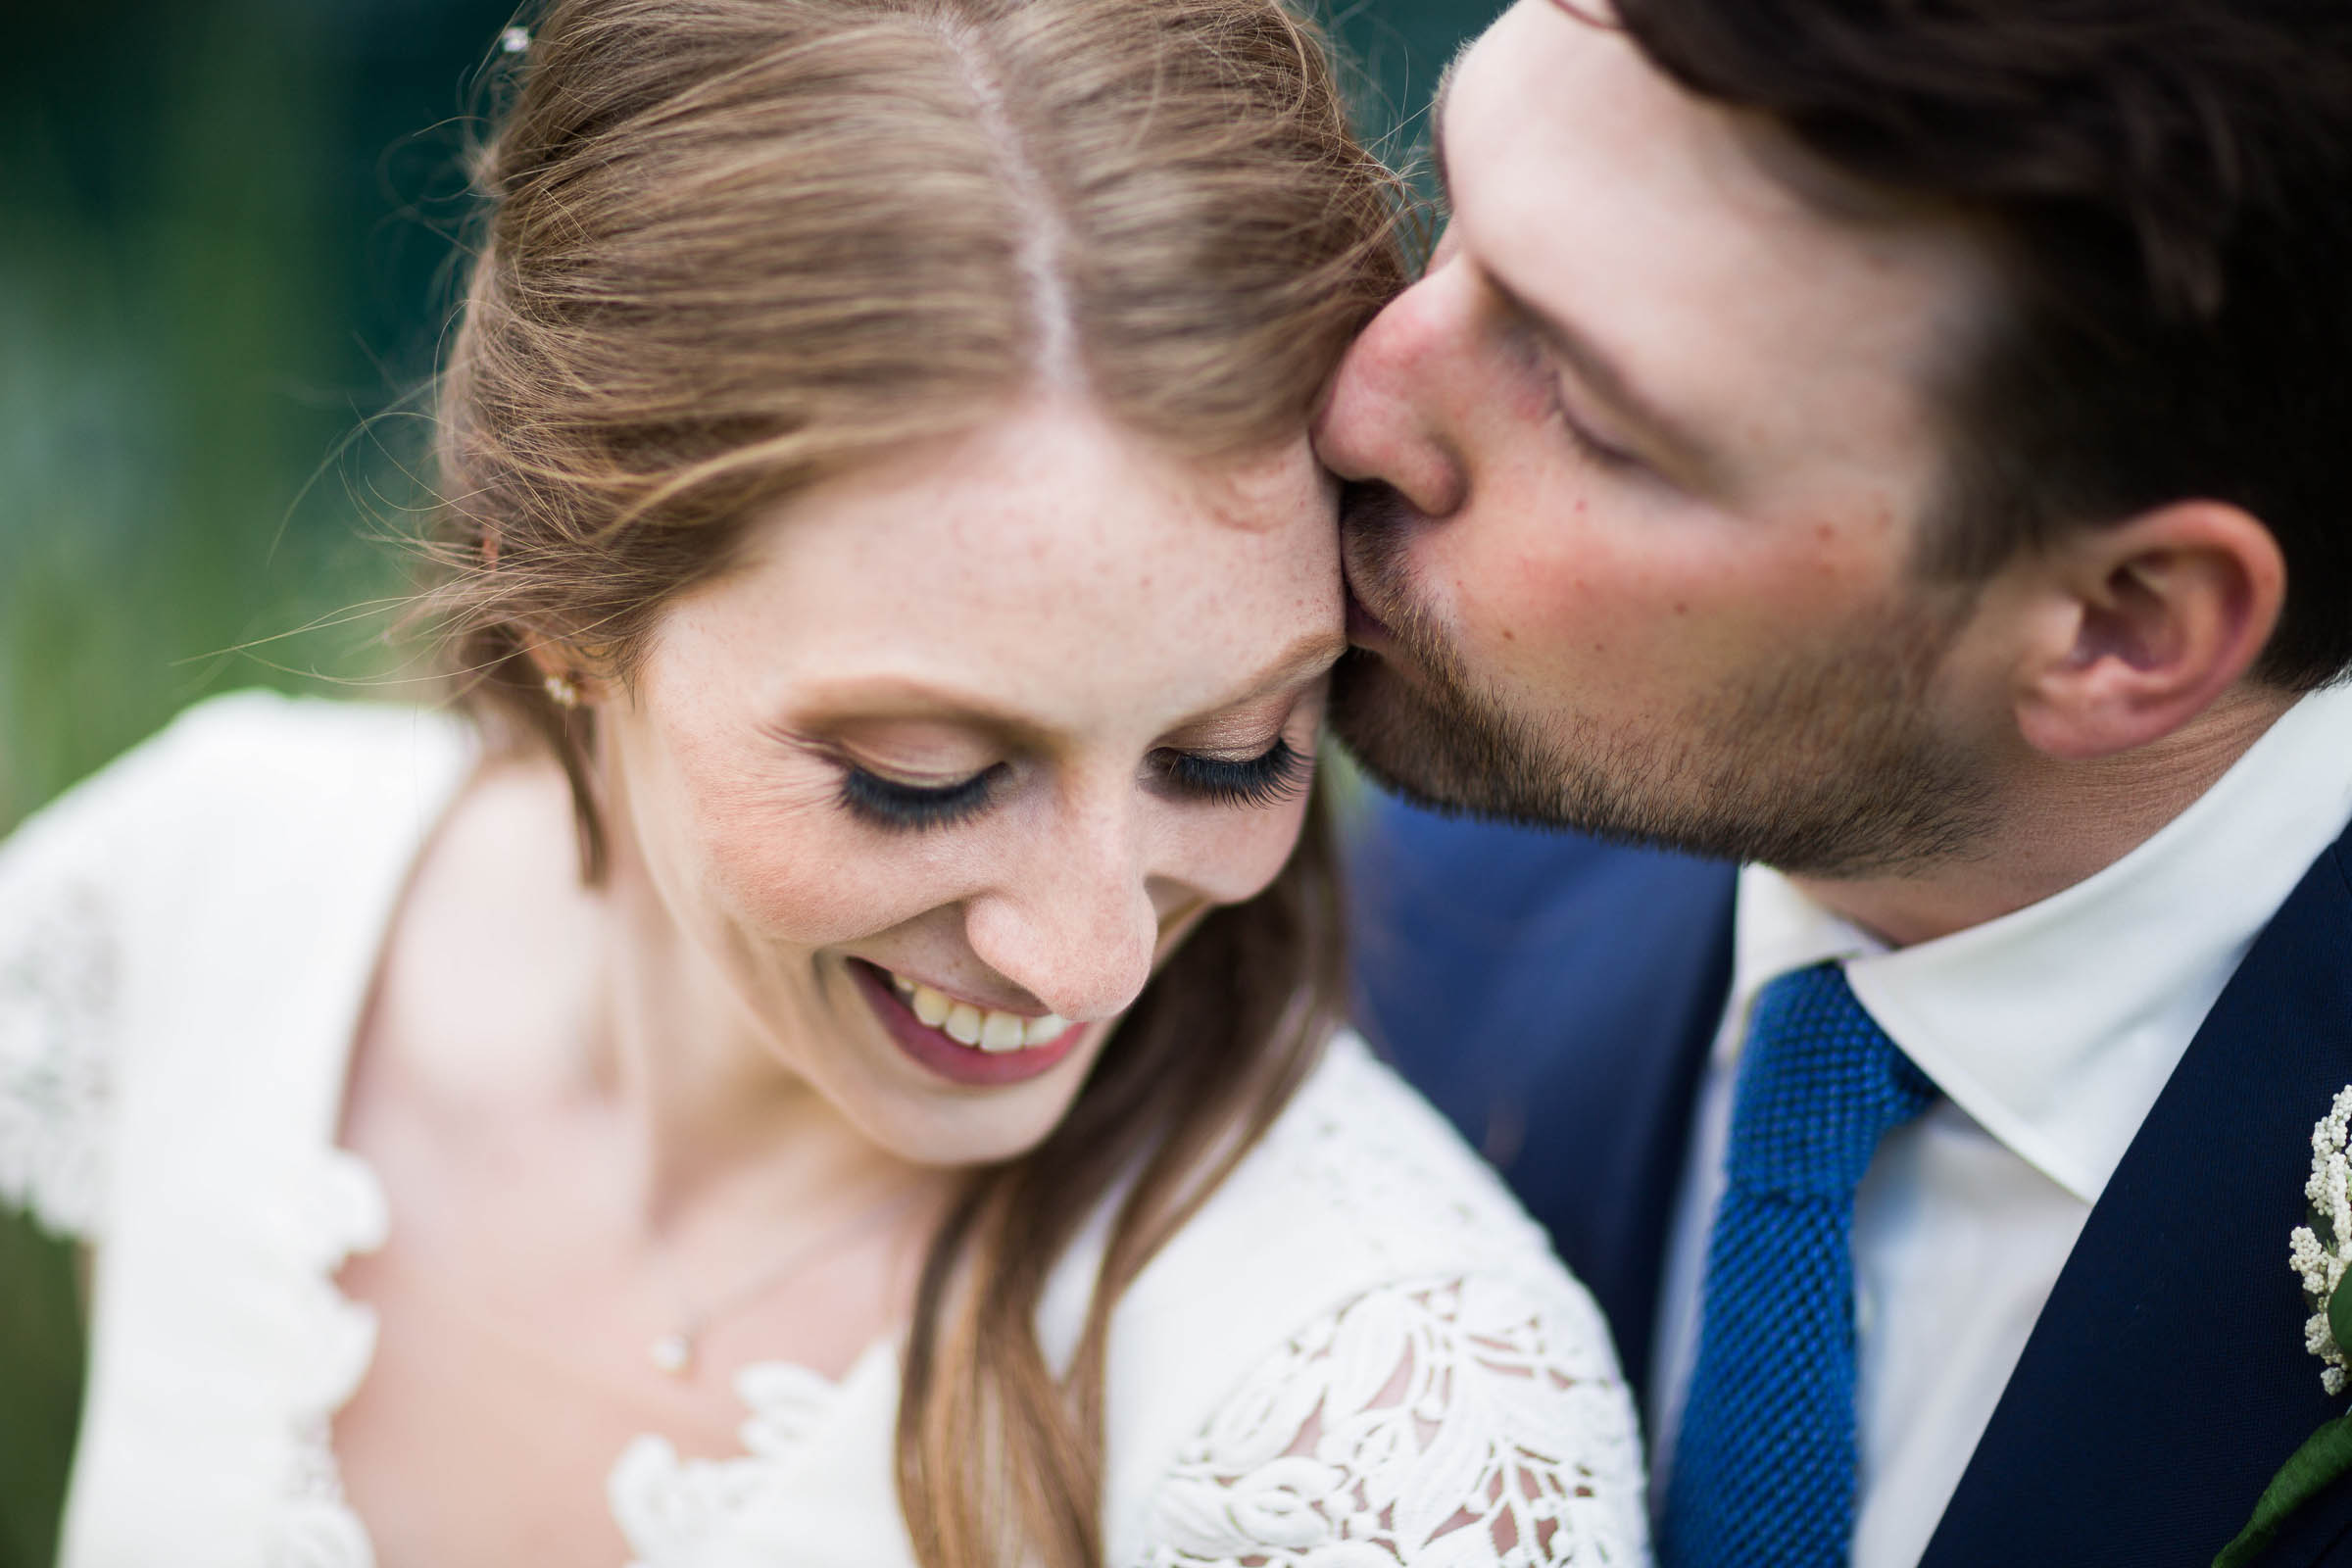 Groom softly kissing bride after wedding ceremony